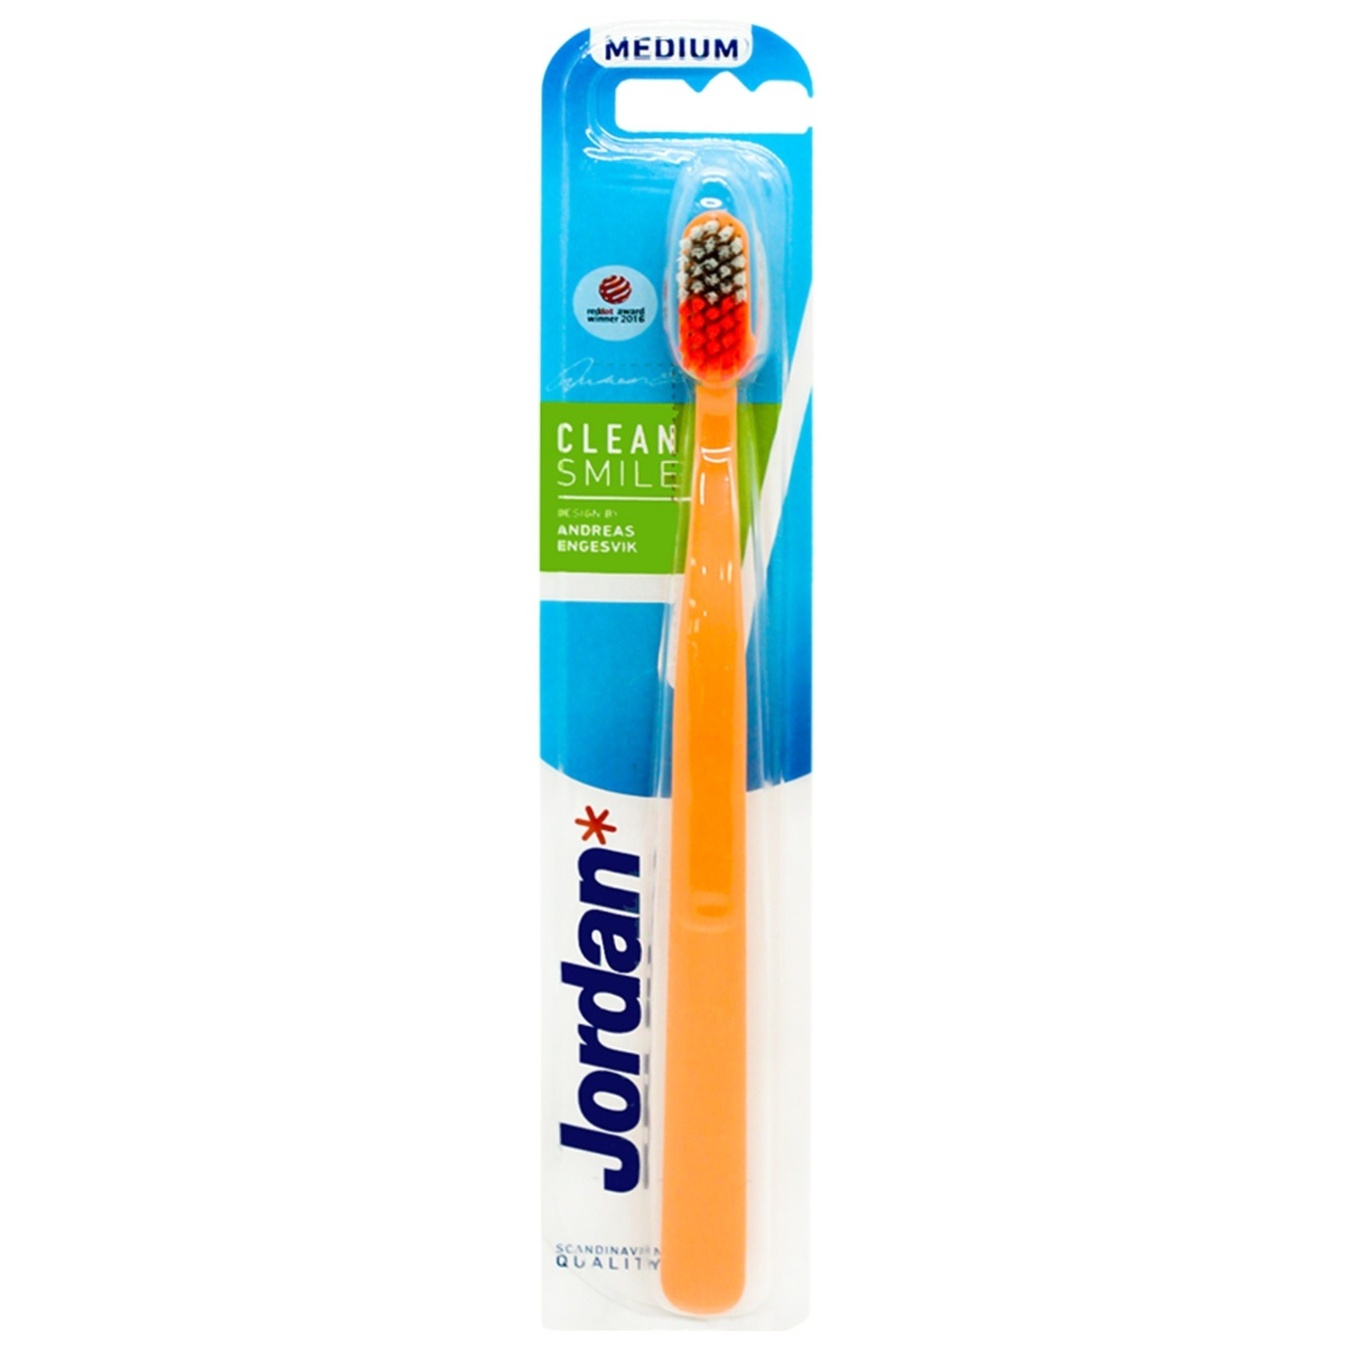 Toothbrush Jordan clean smile medium 2